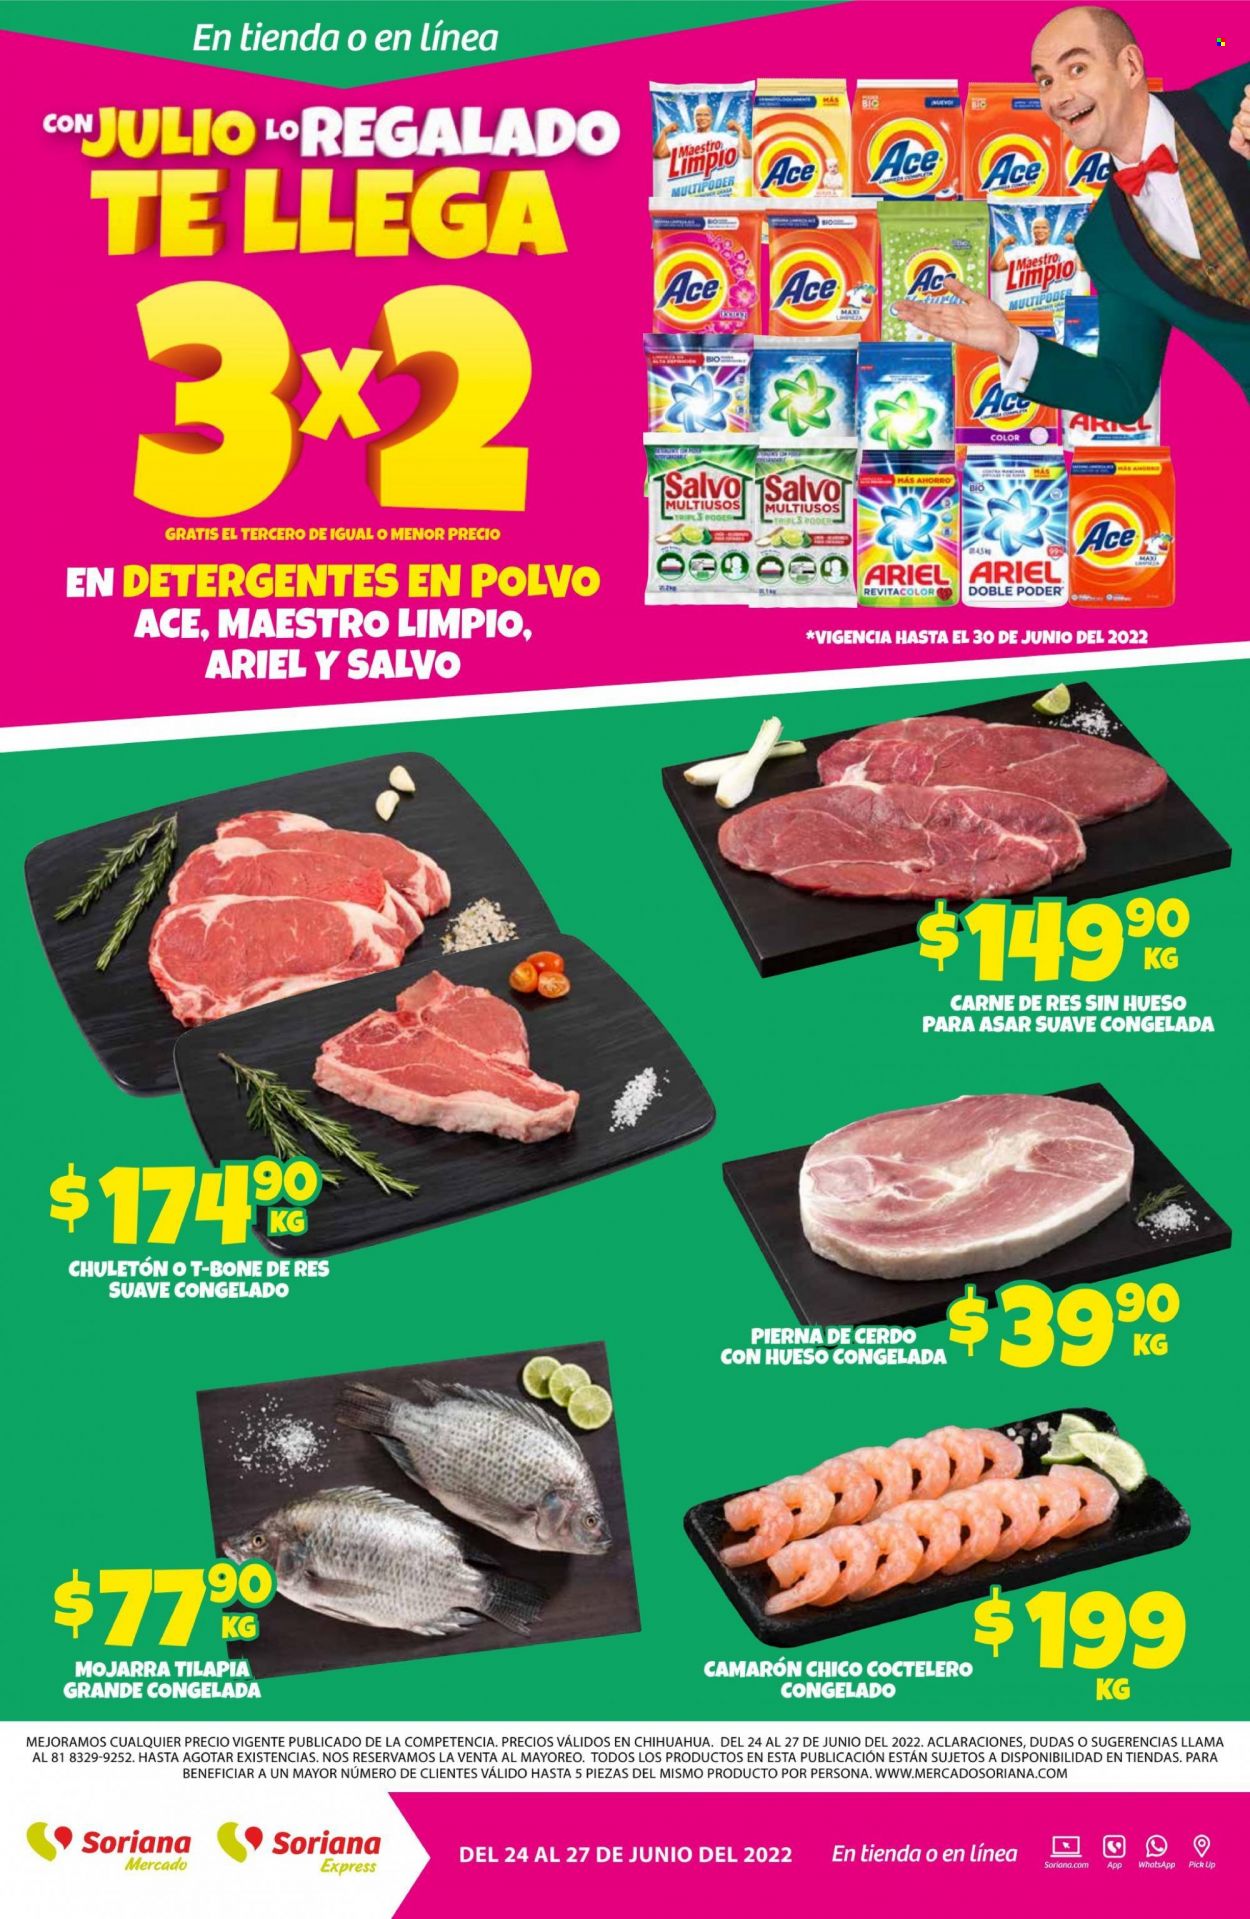 thumbnail - Folleto actual Soriana - 24.6.2022 - 27.6.2022 - Ventas - chuletón, t-bone steak, camarón, tilapia, Ariel, detergente. Página 1.